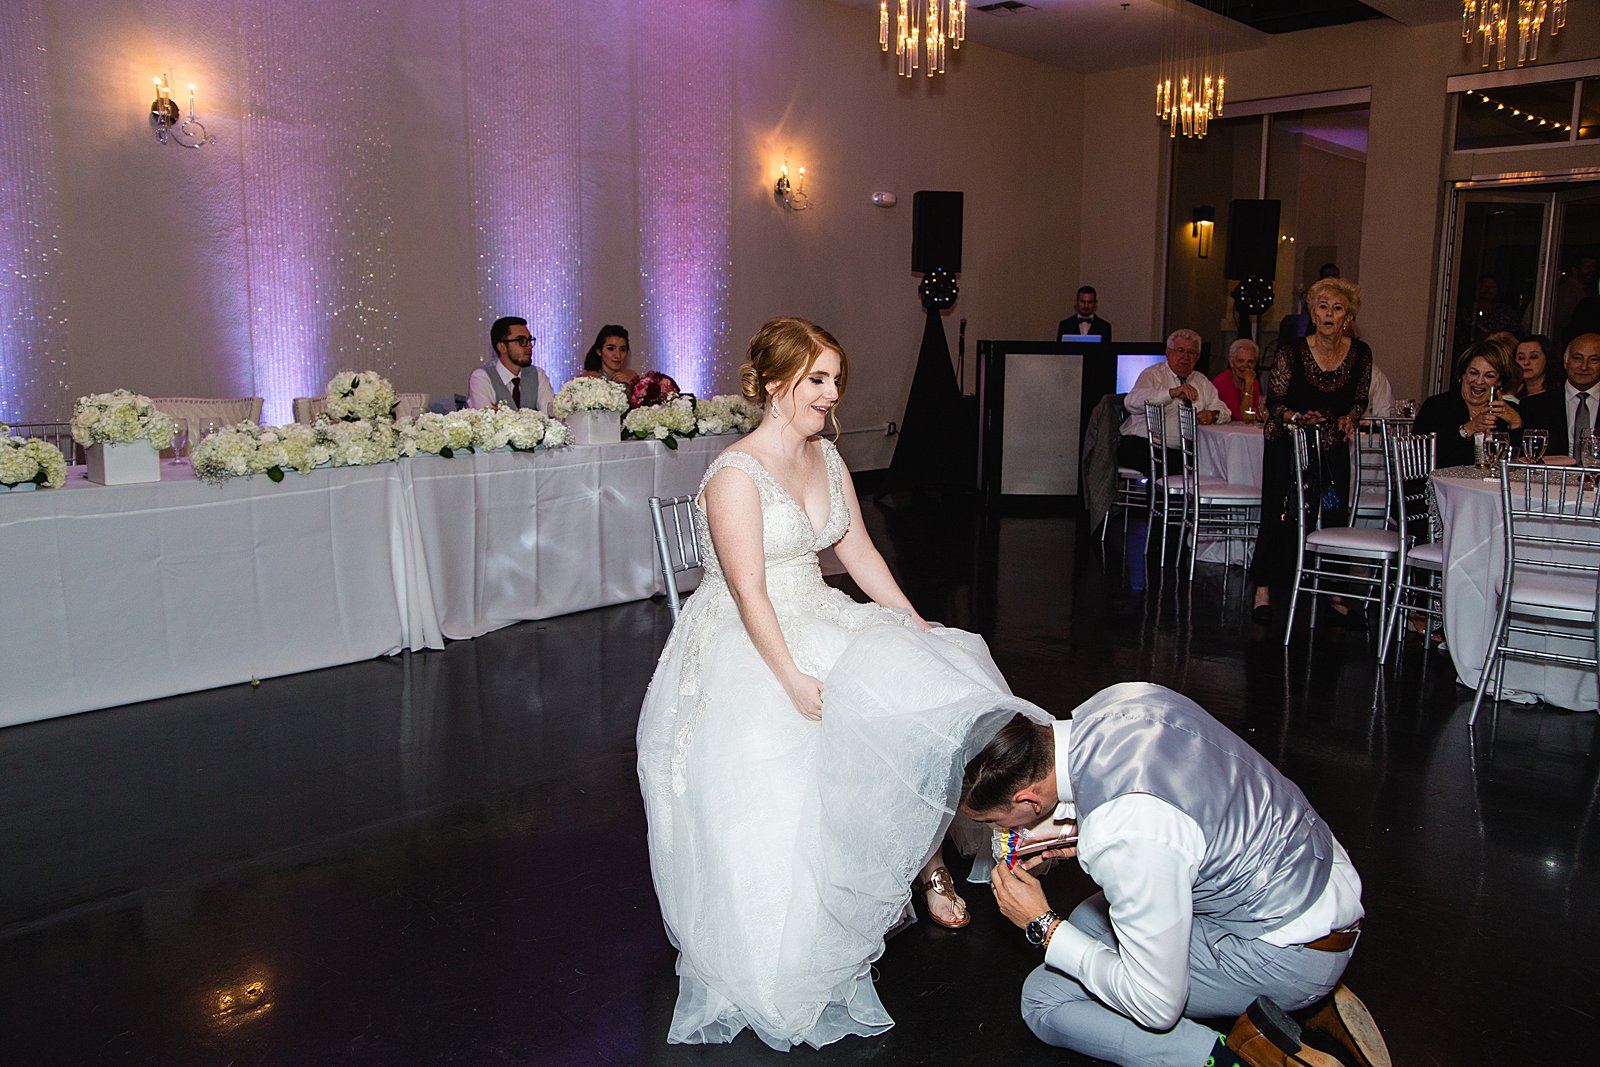 Garter toss at SoHo63 wedding reception by Chandler wedding photographer PMA Photography.